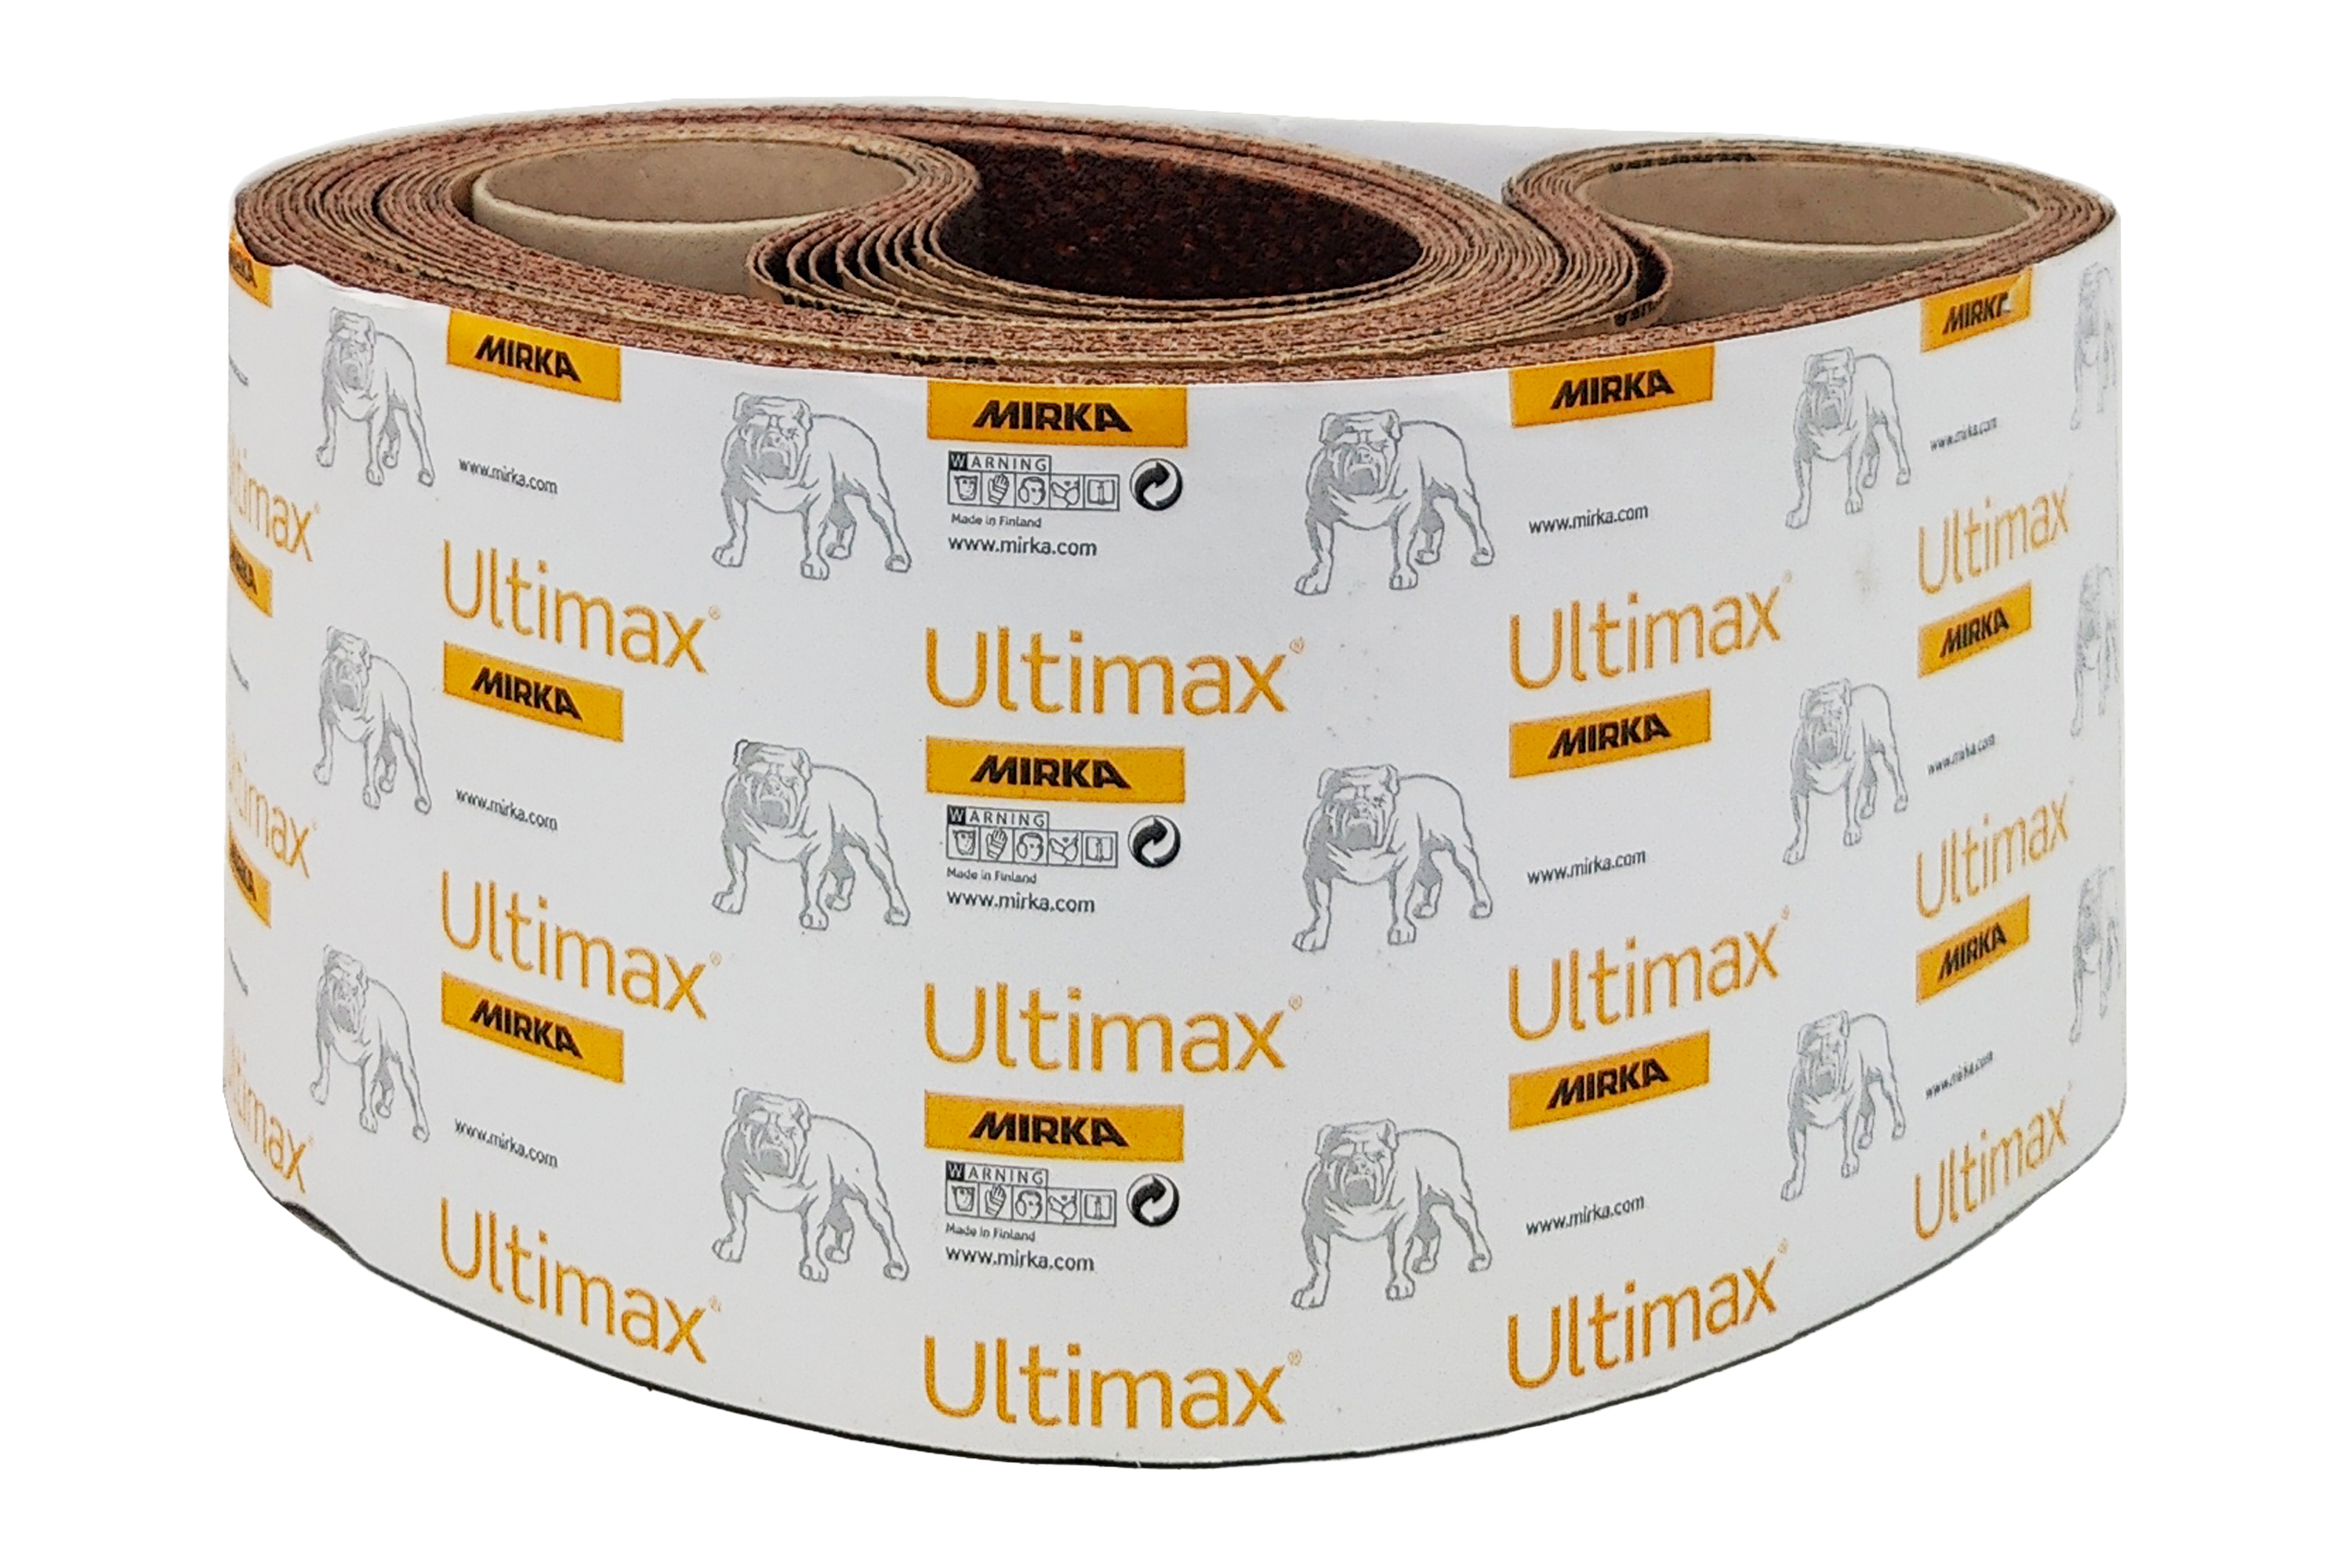 Abbildung Mirka Ultimax 150x6900mm mit Verpackung.